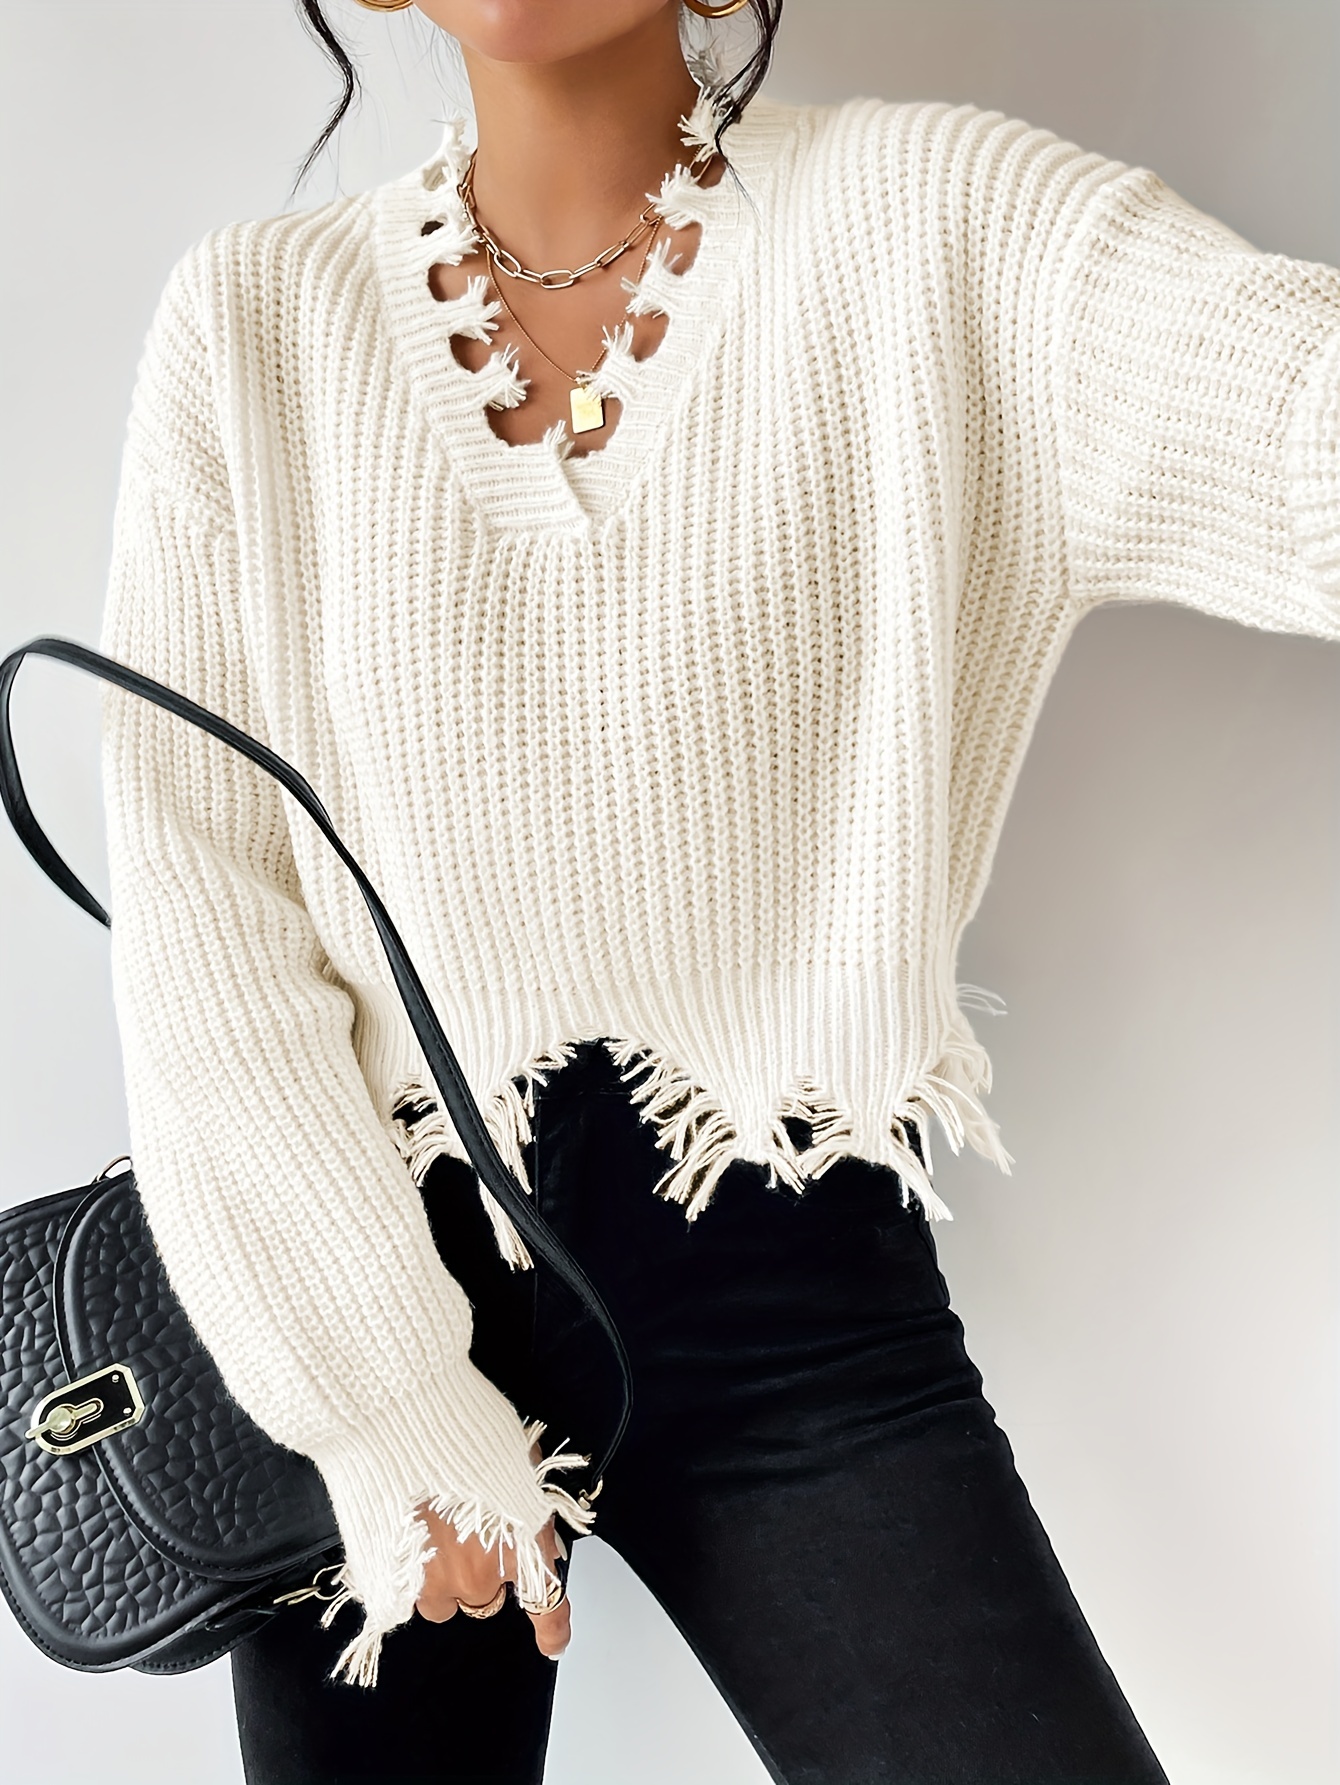 Knit Top, Black, White, Crop, Long Sleeve